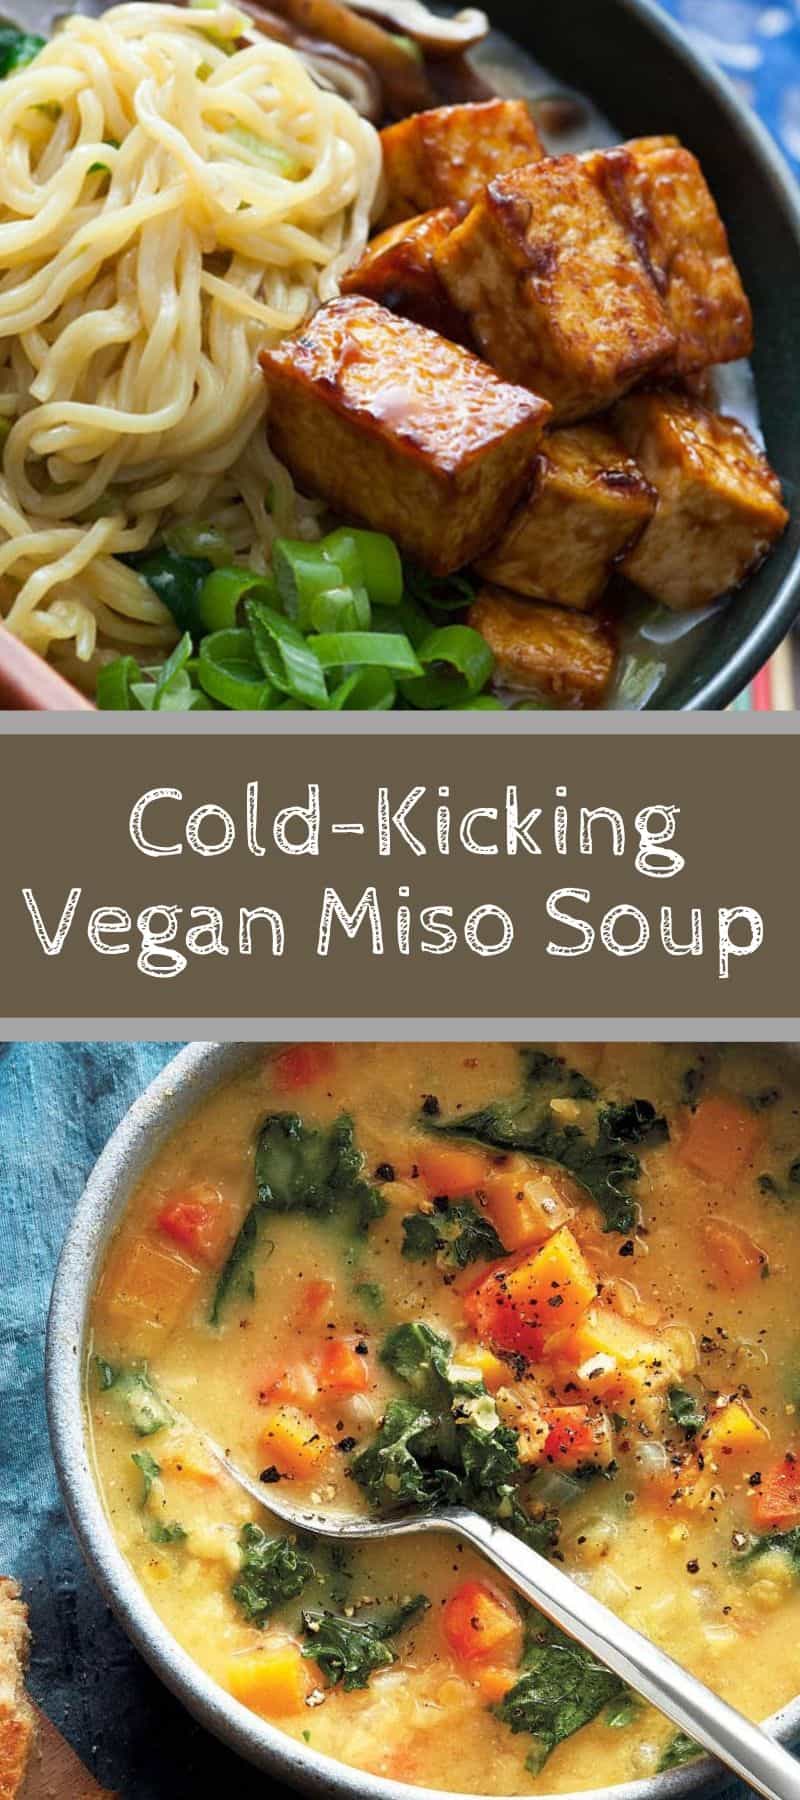 Cold-Kicking Vegan Miso Soup Recipe 3